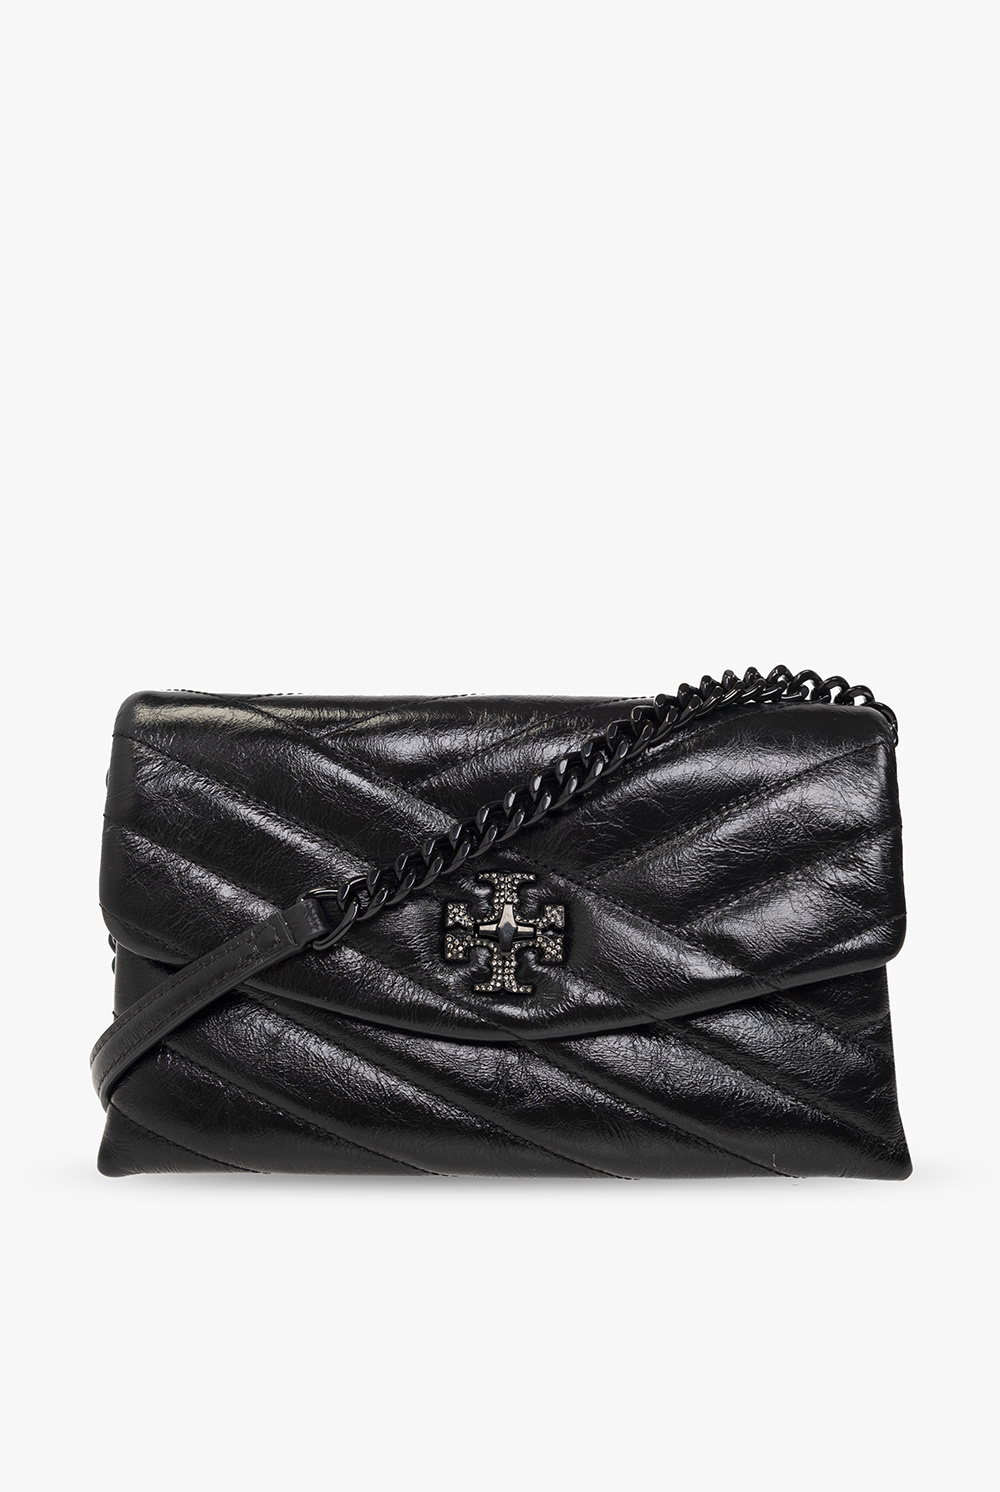 Tory Burch 'Kira Chevron' leather wallet, Women's Accessories